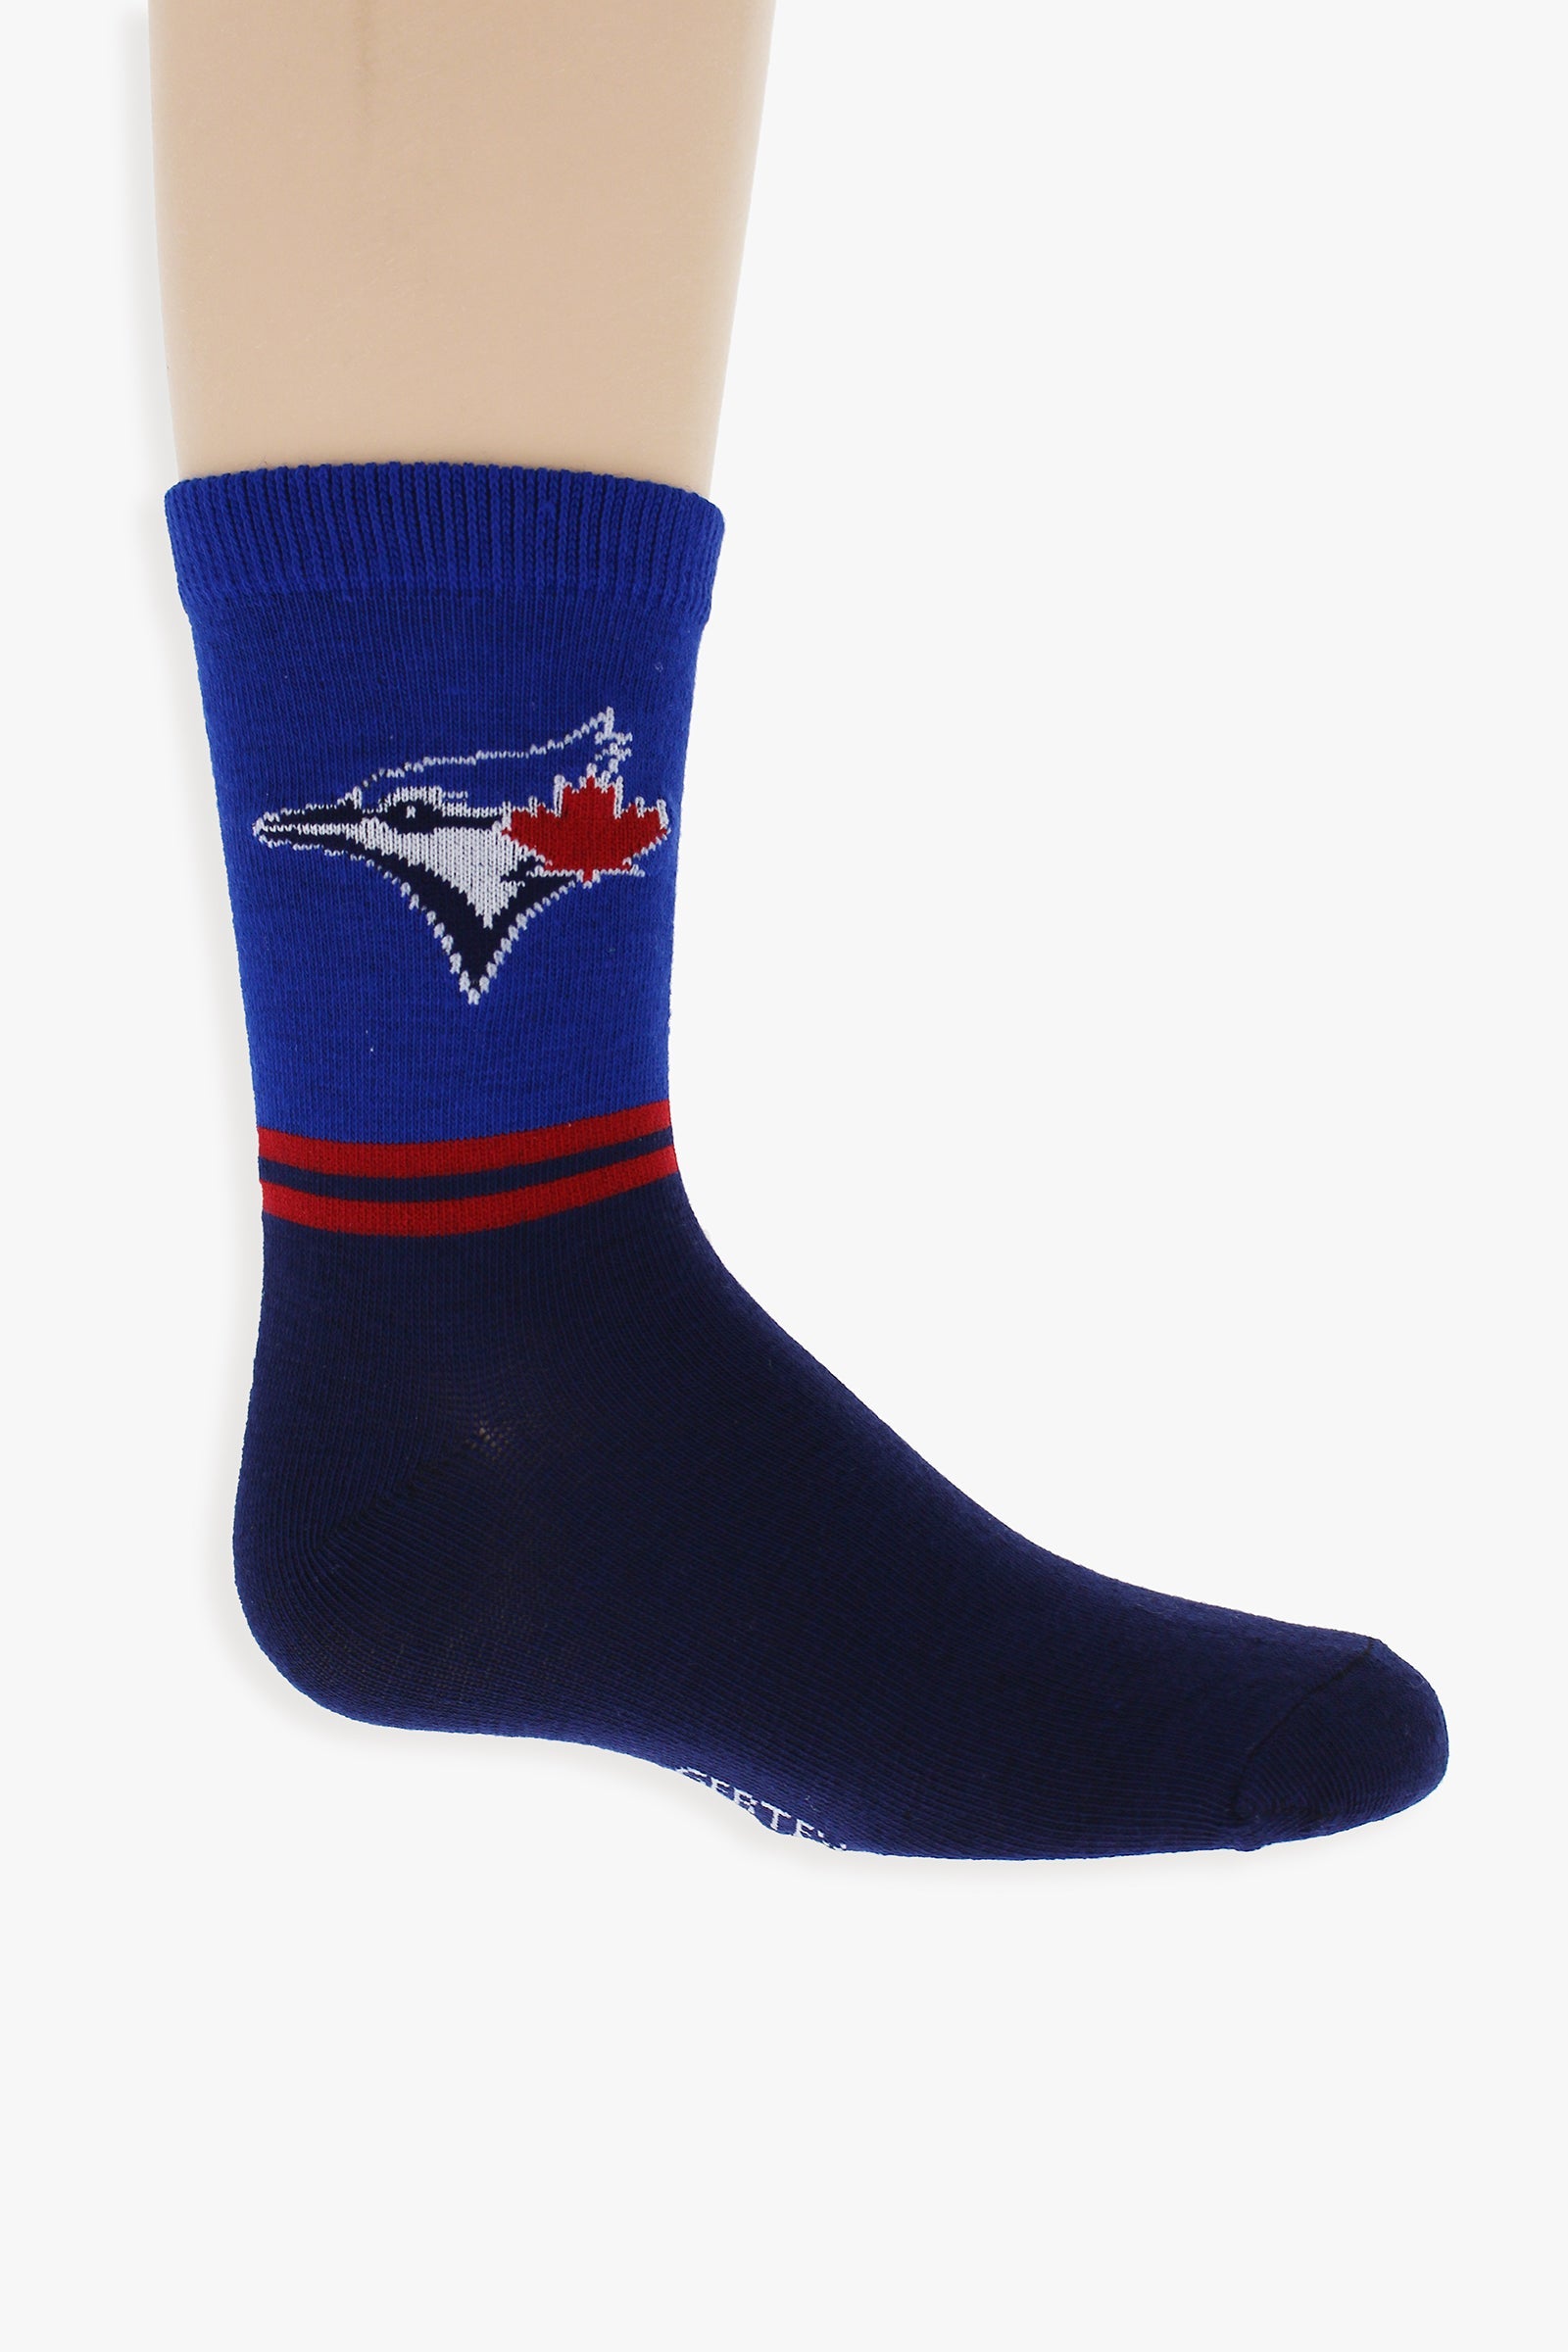 MLB Toronto Blue Jays Youth Boys 3-Pack Crew Socks